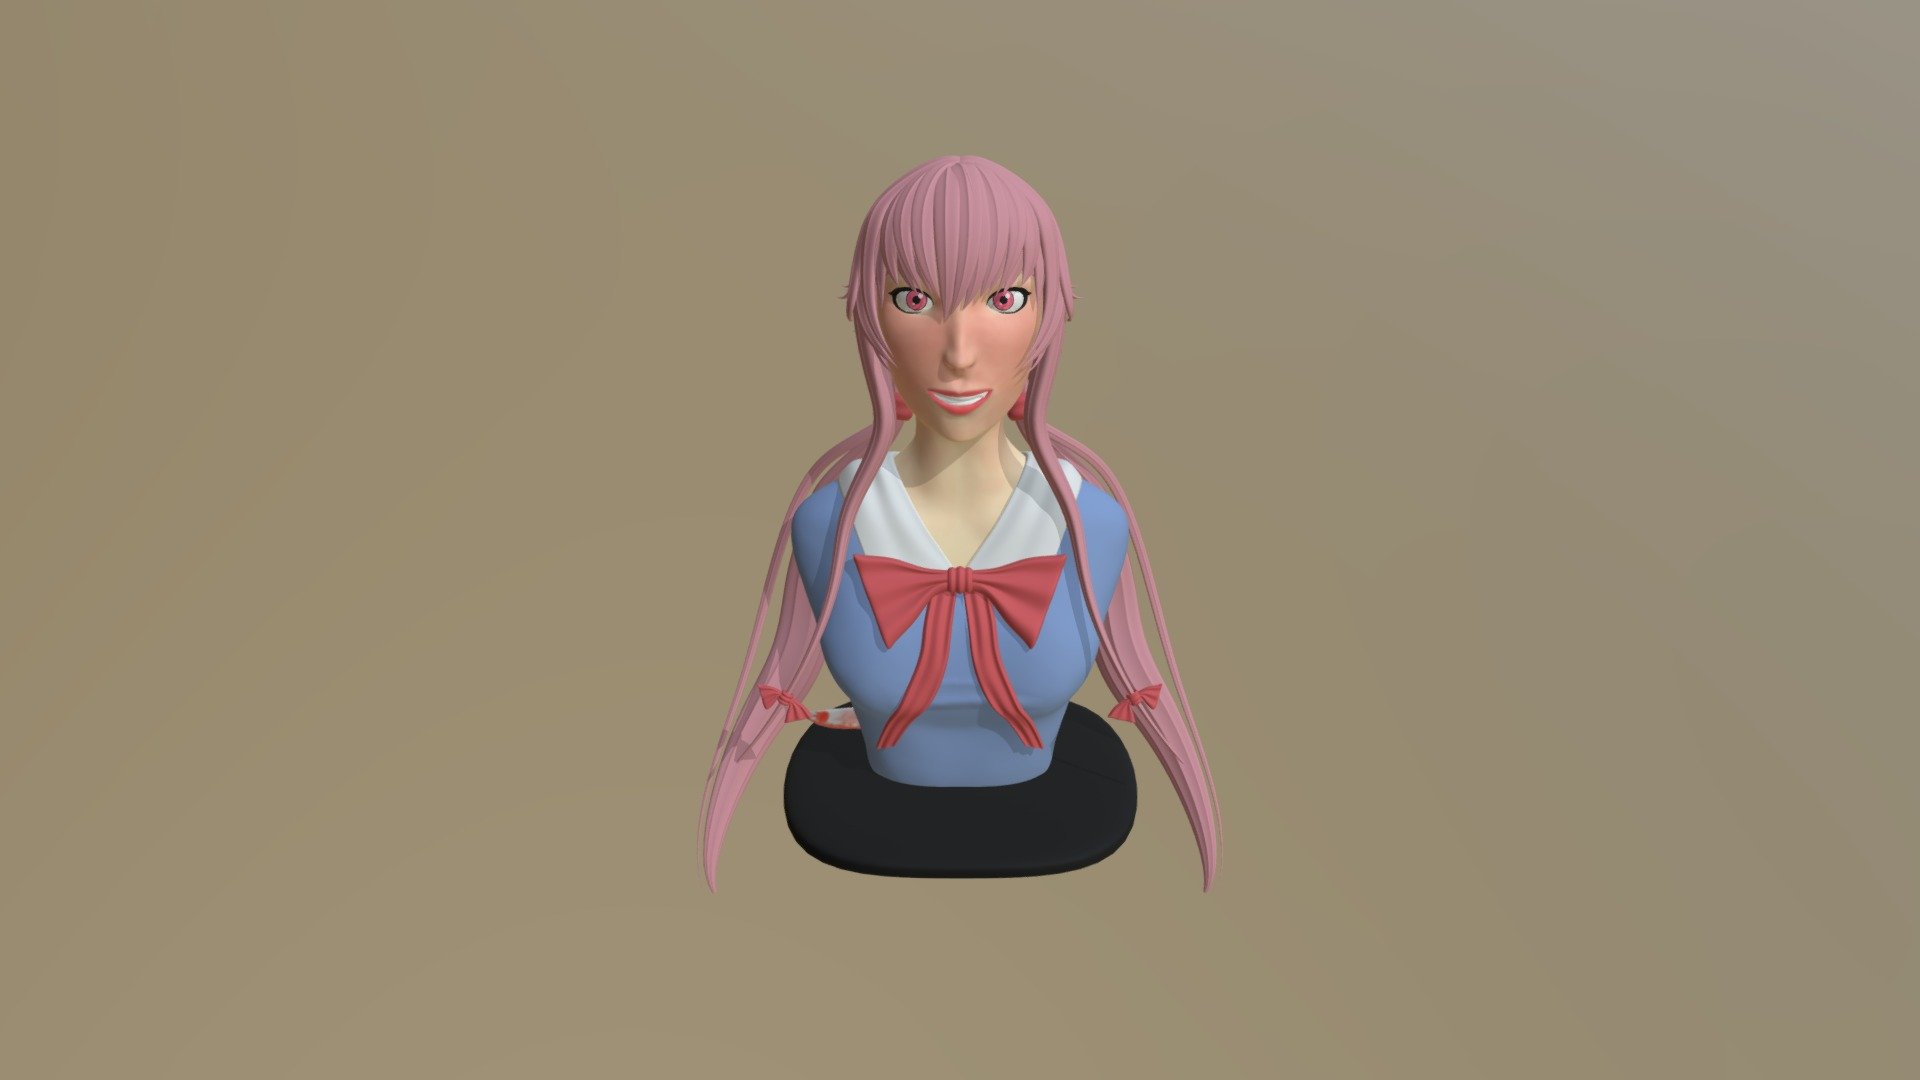 mirai nikki - yuno gasai hurt- anime character - vrm model 3D